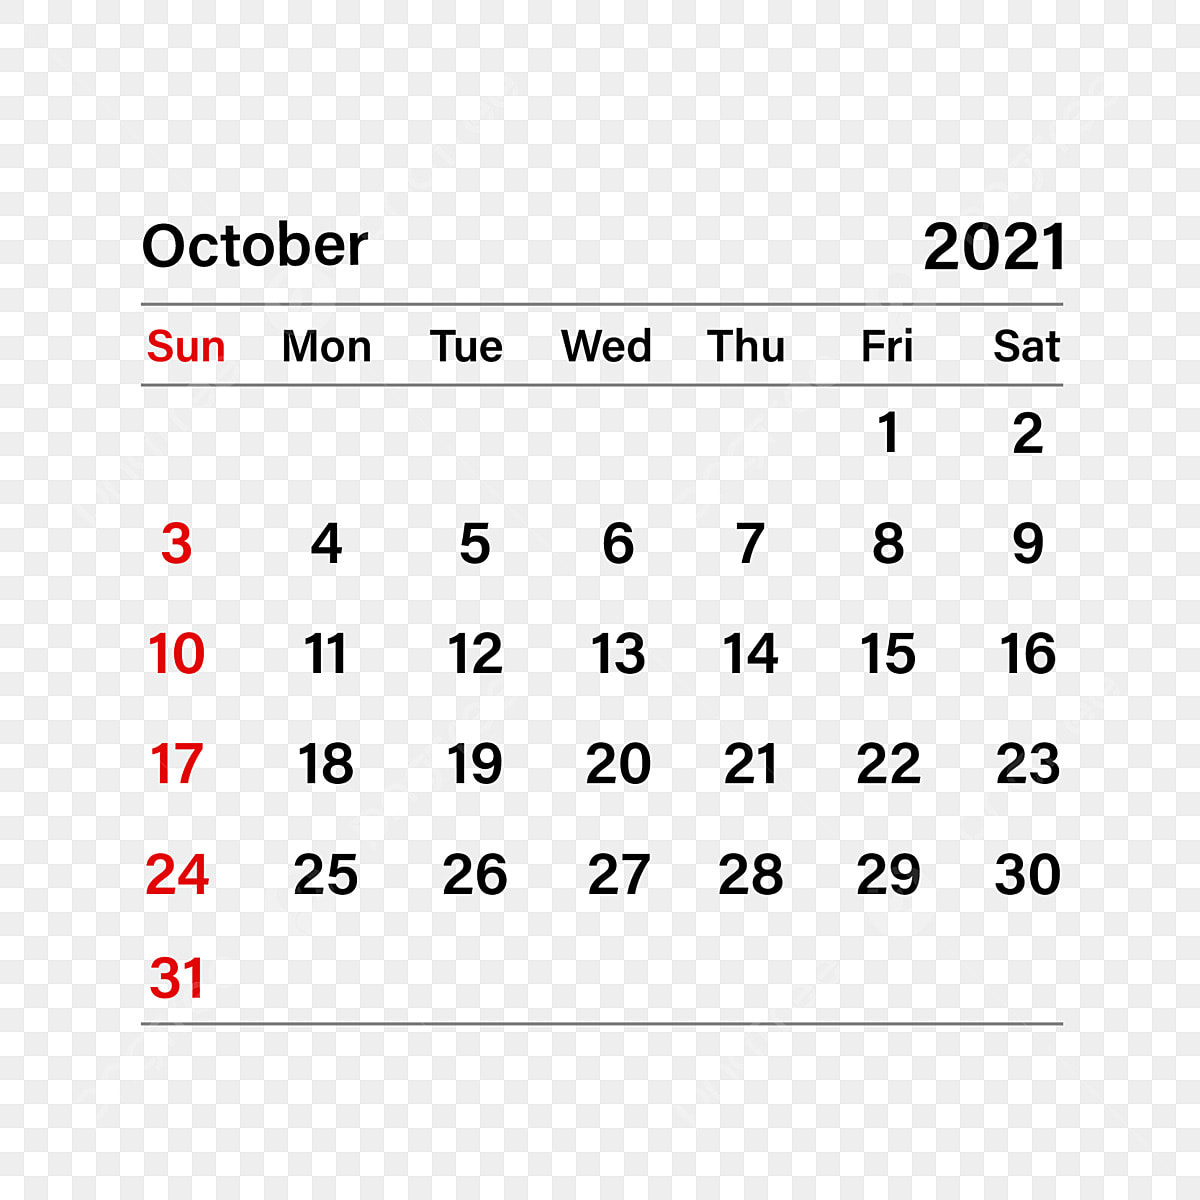 October calendar vector hd png images october calendar calendar calendar october png image for free download